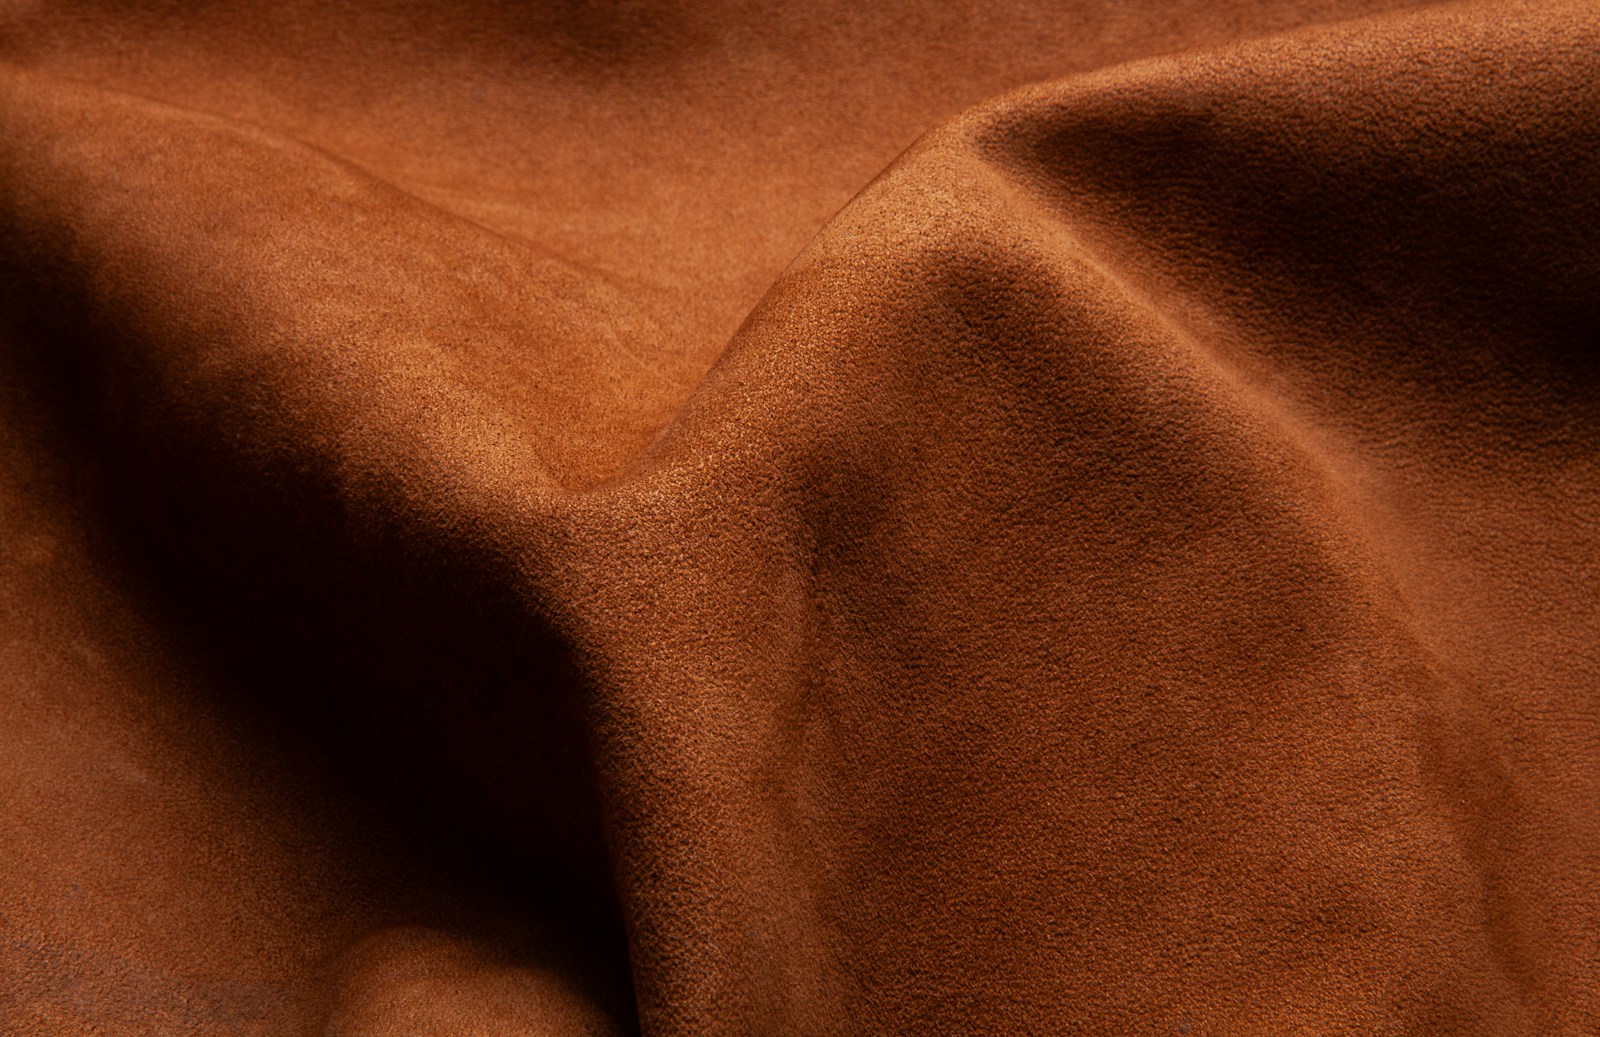 Velvet brown textile in close up image